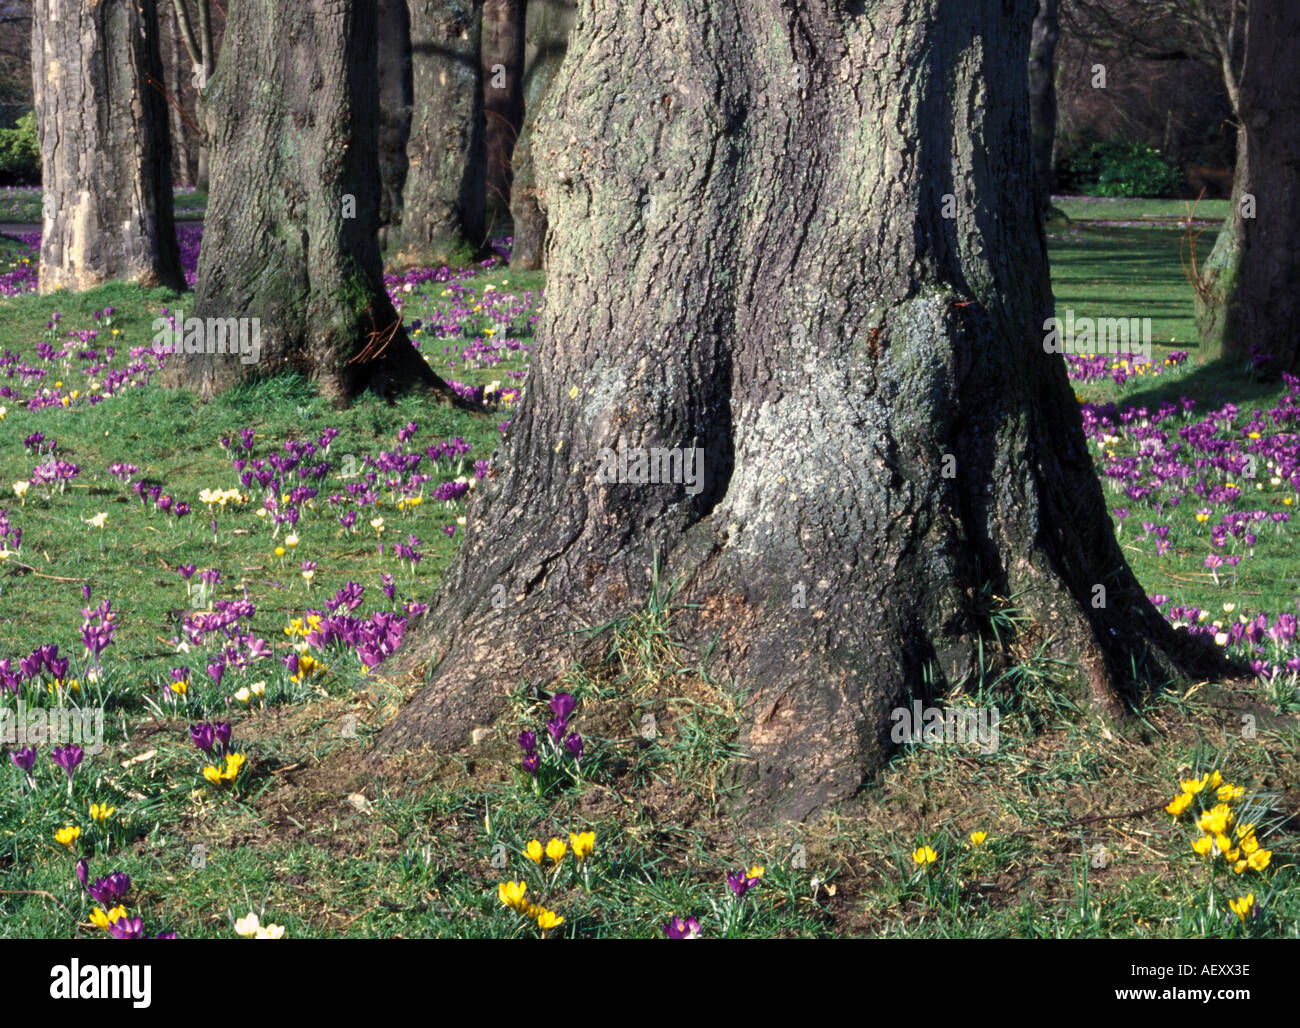 Full frame landscape format image of spring crocus bedded woodland floor with large tree trunks Stock Photo